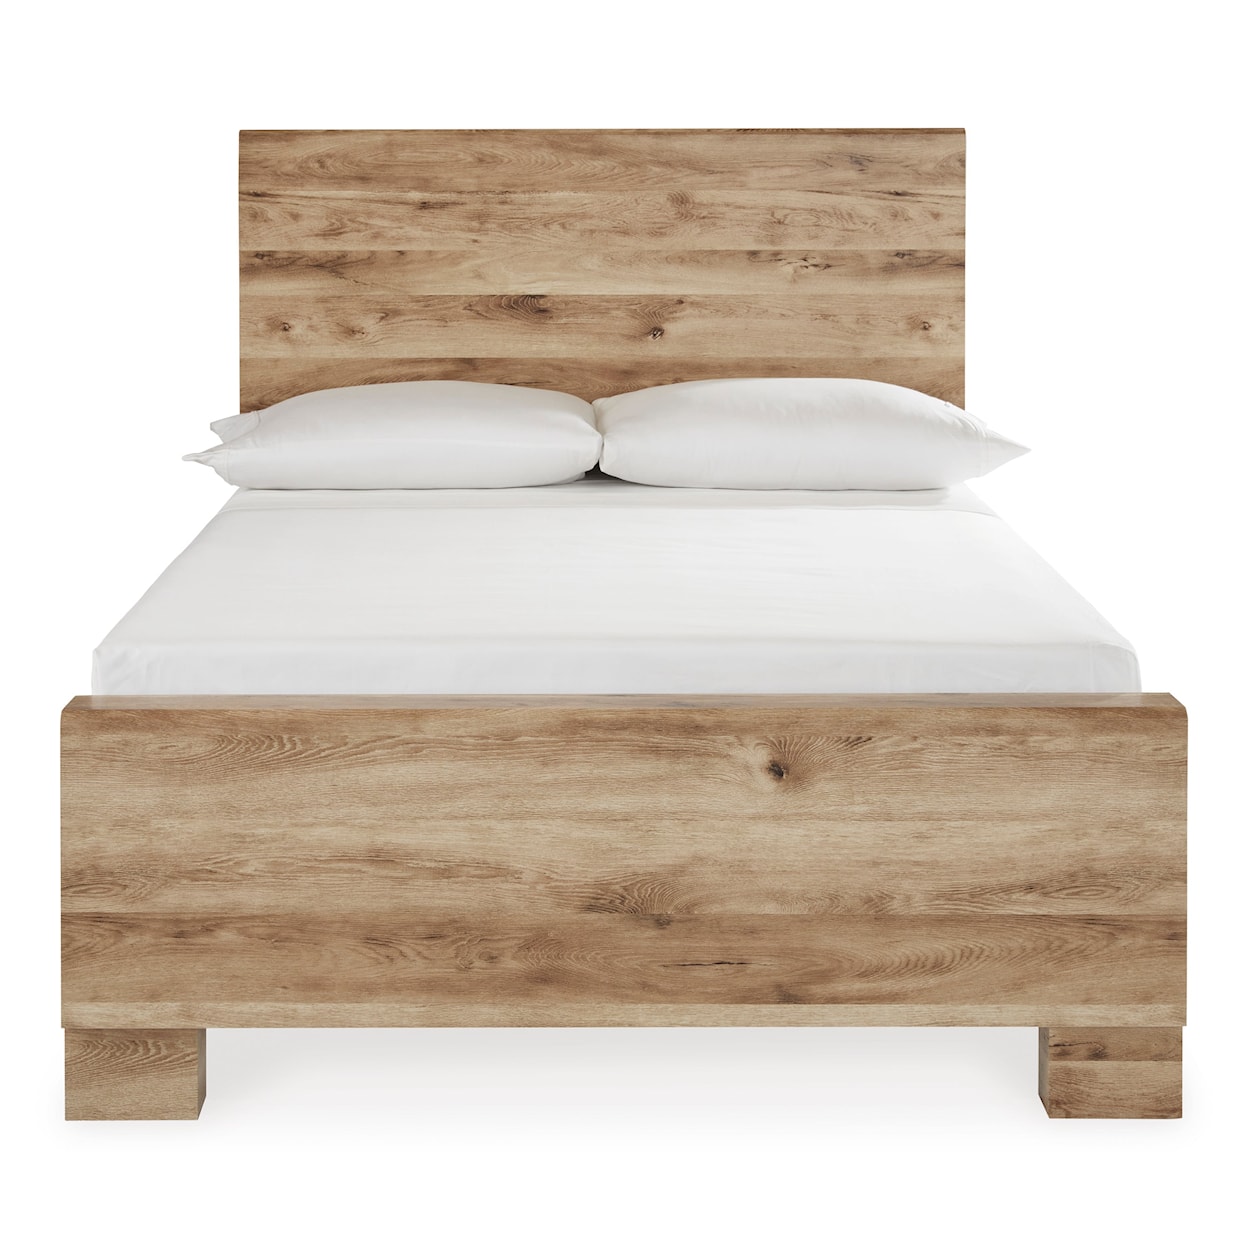 Ashley Furniture Signature Design Hyanna Full Panel Bed